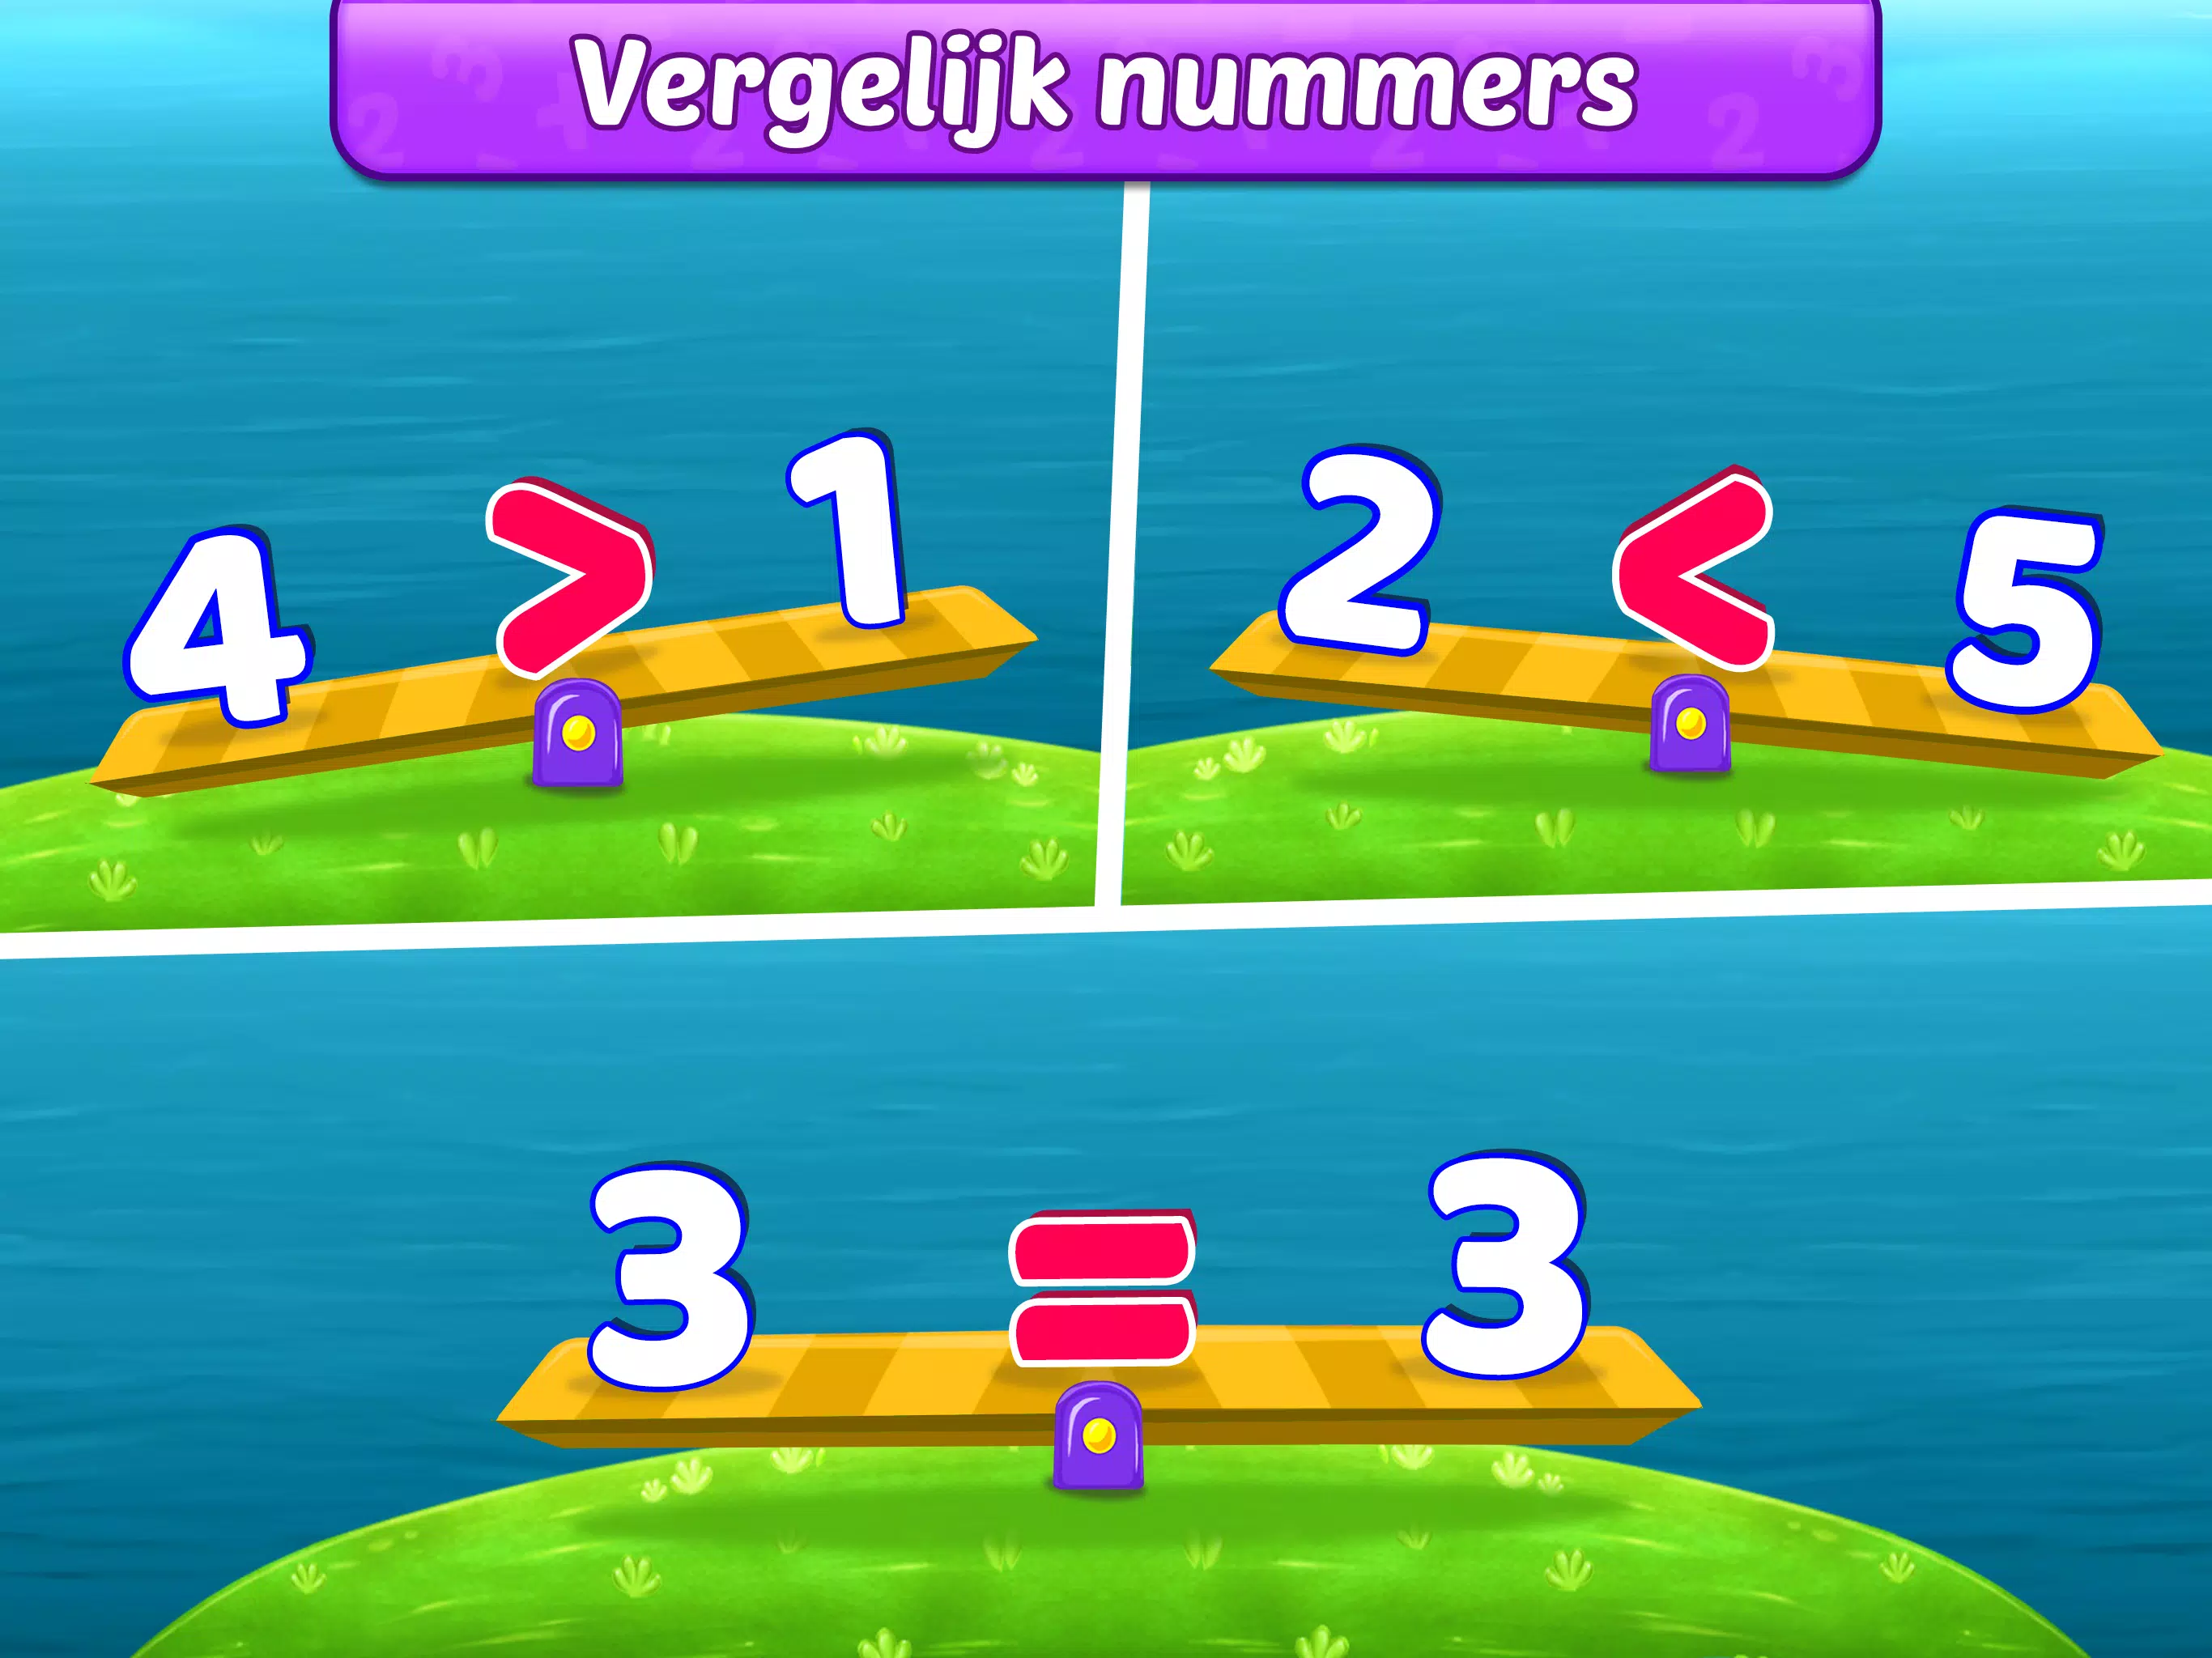 Wiskunde spelletjes nederlands APK voor Android Download